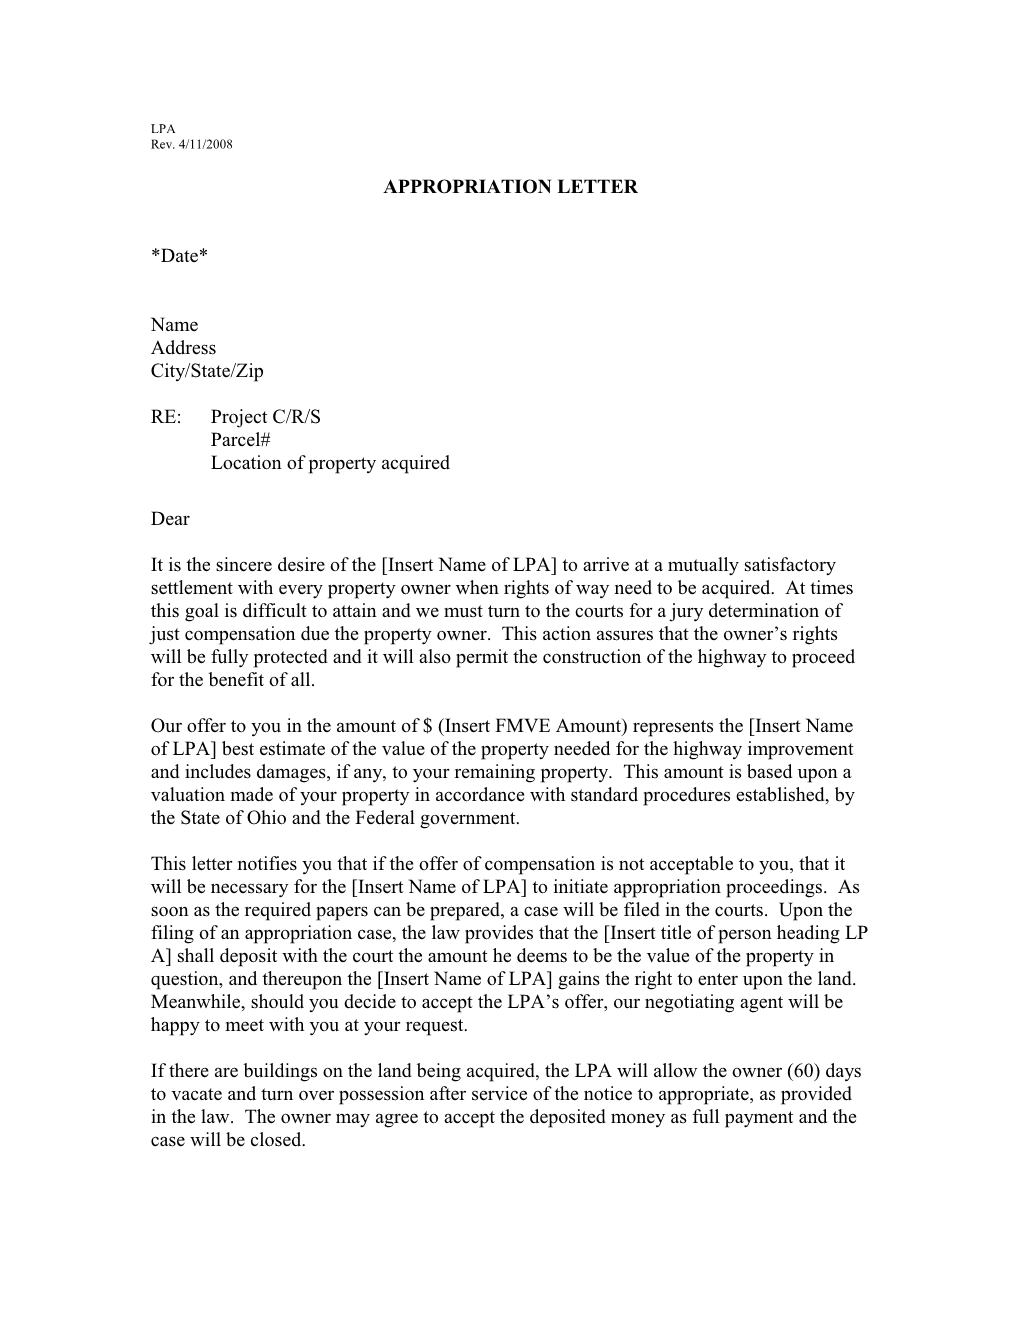 LPA Appropriation Letter